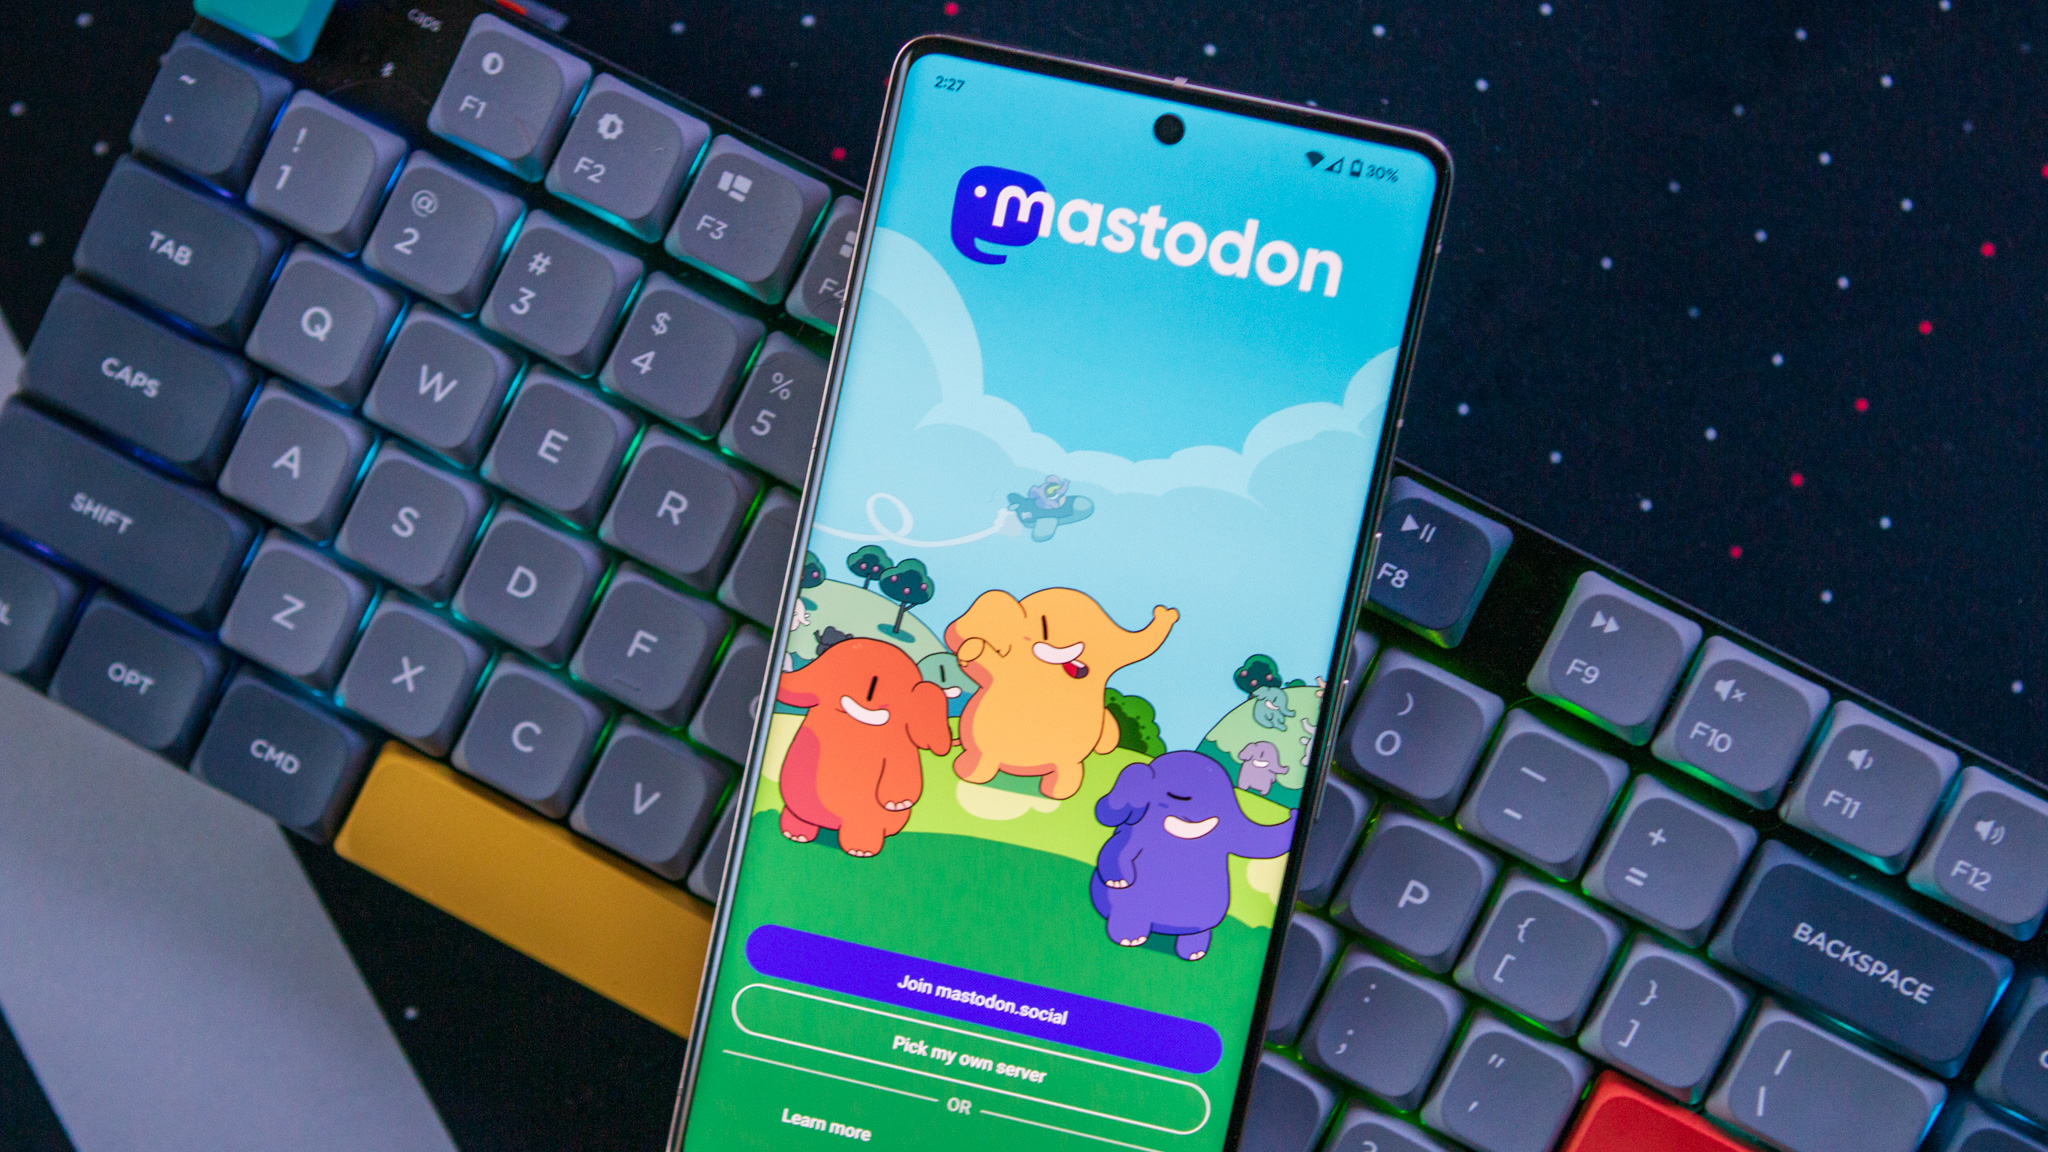 Mastodon launch screen